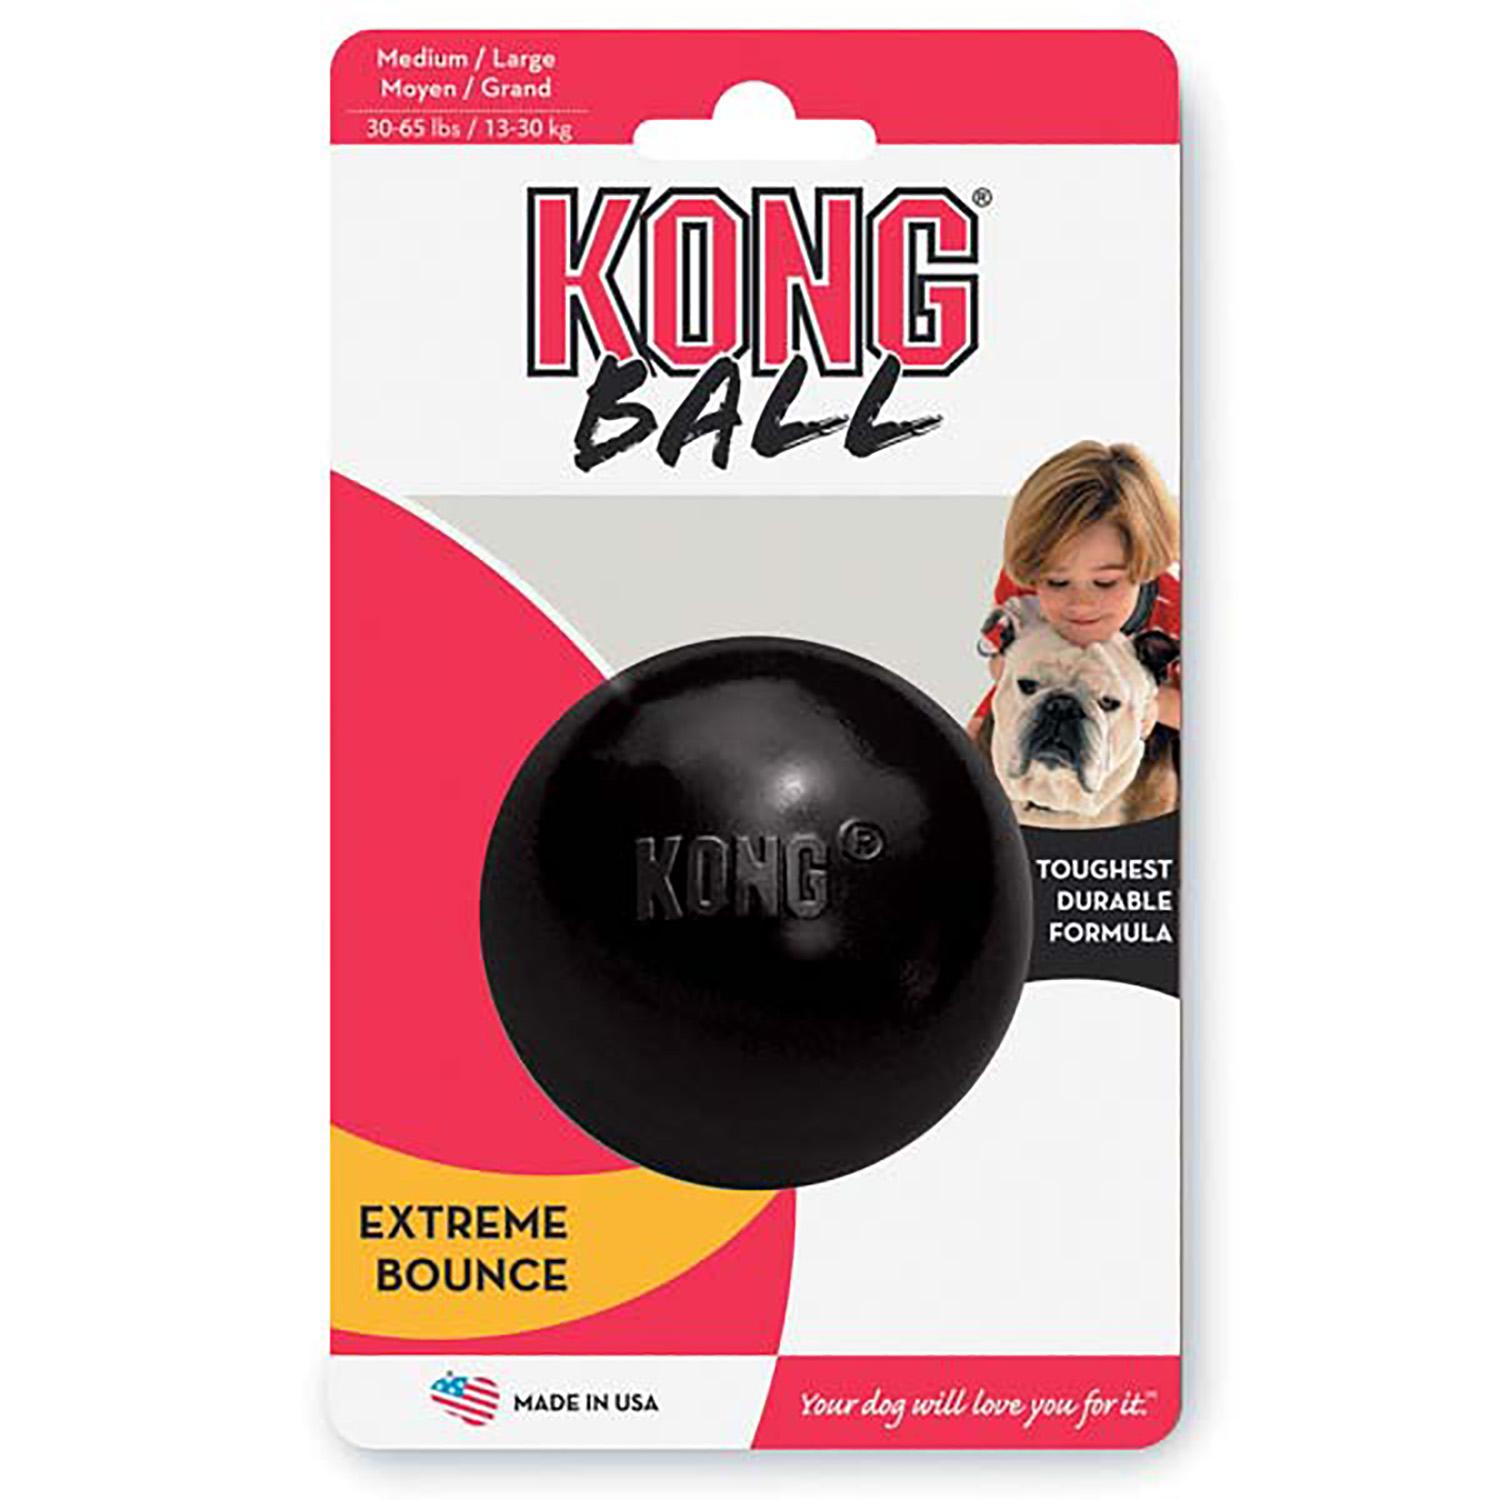 KONG Extreme Ball Dog Toy - Black